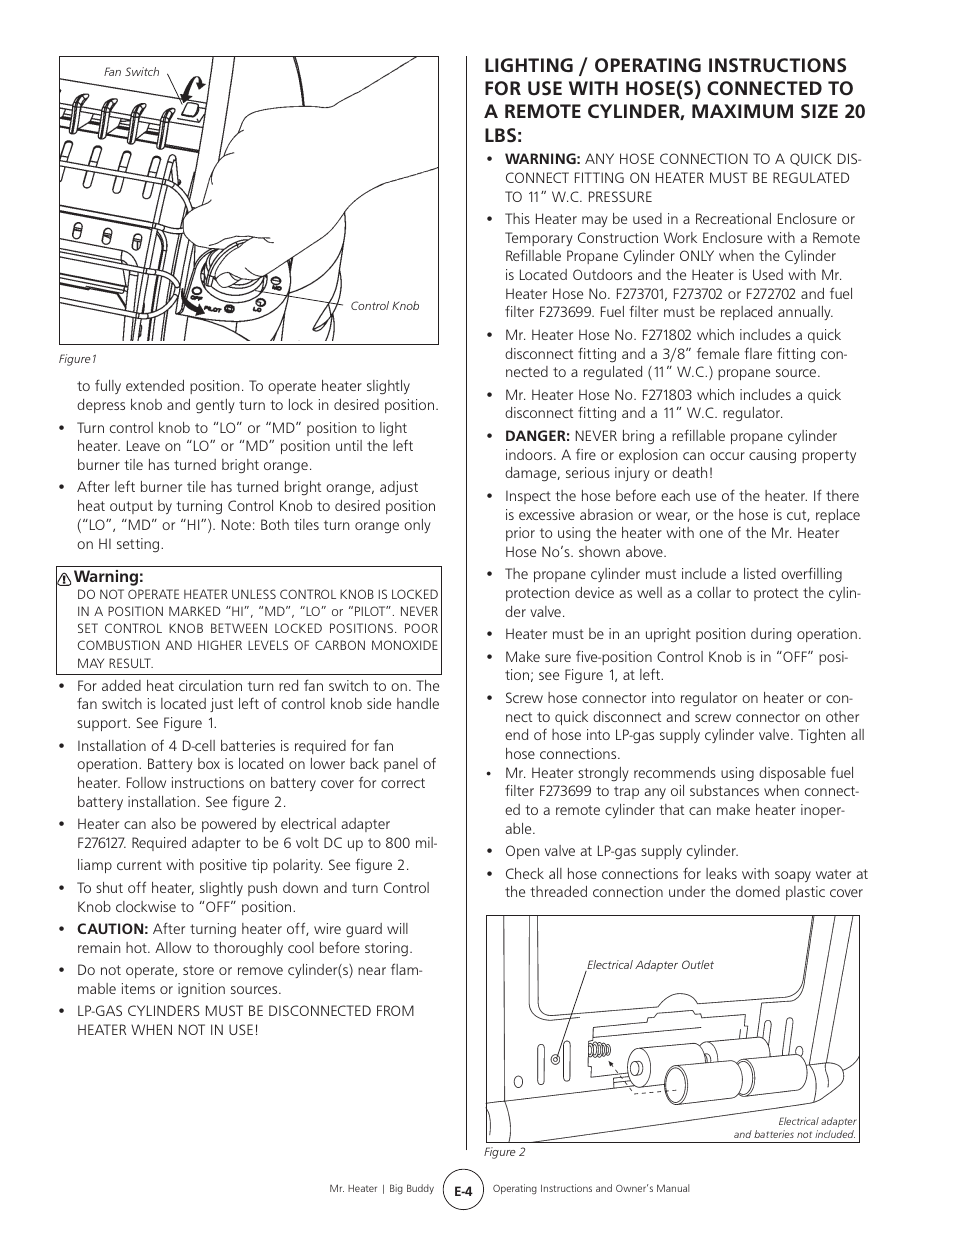 Mr. Heater BIG BUDDY MH188 User Manual | Page 4 / 16